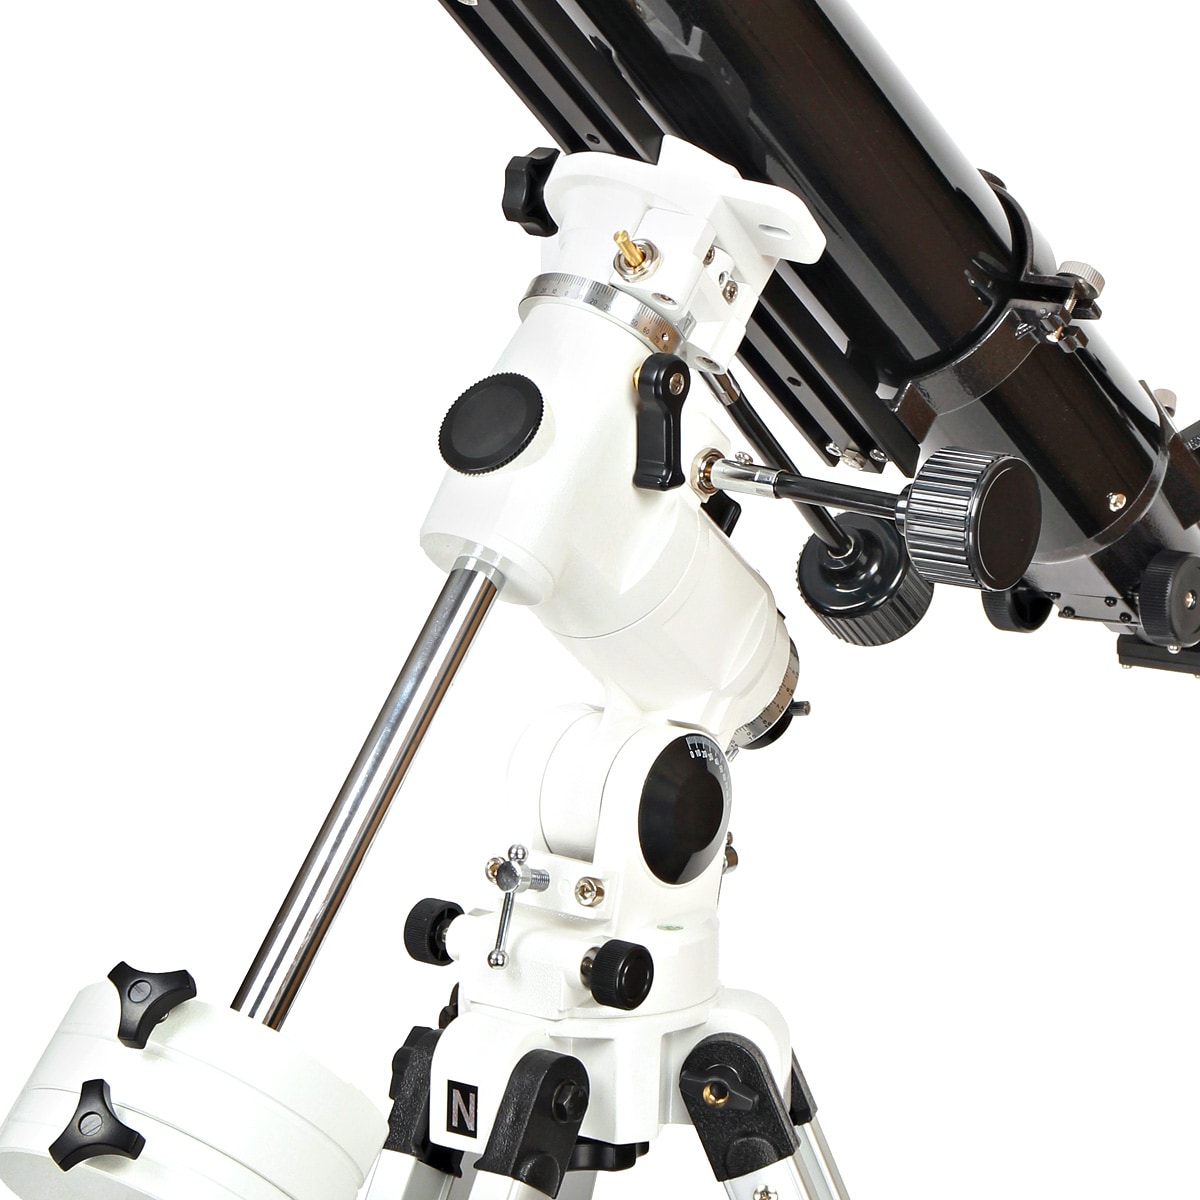 Teleskop Sky-Watcher BK 909 EQ3-2
